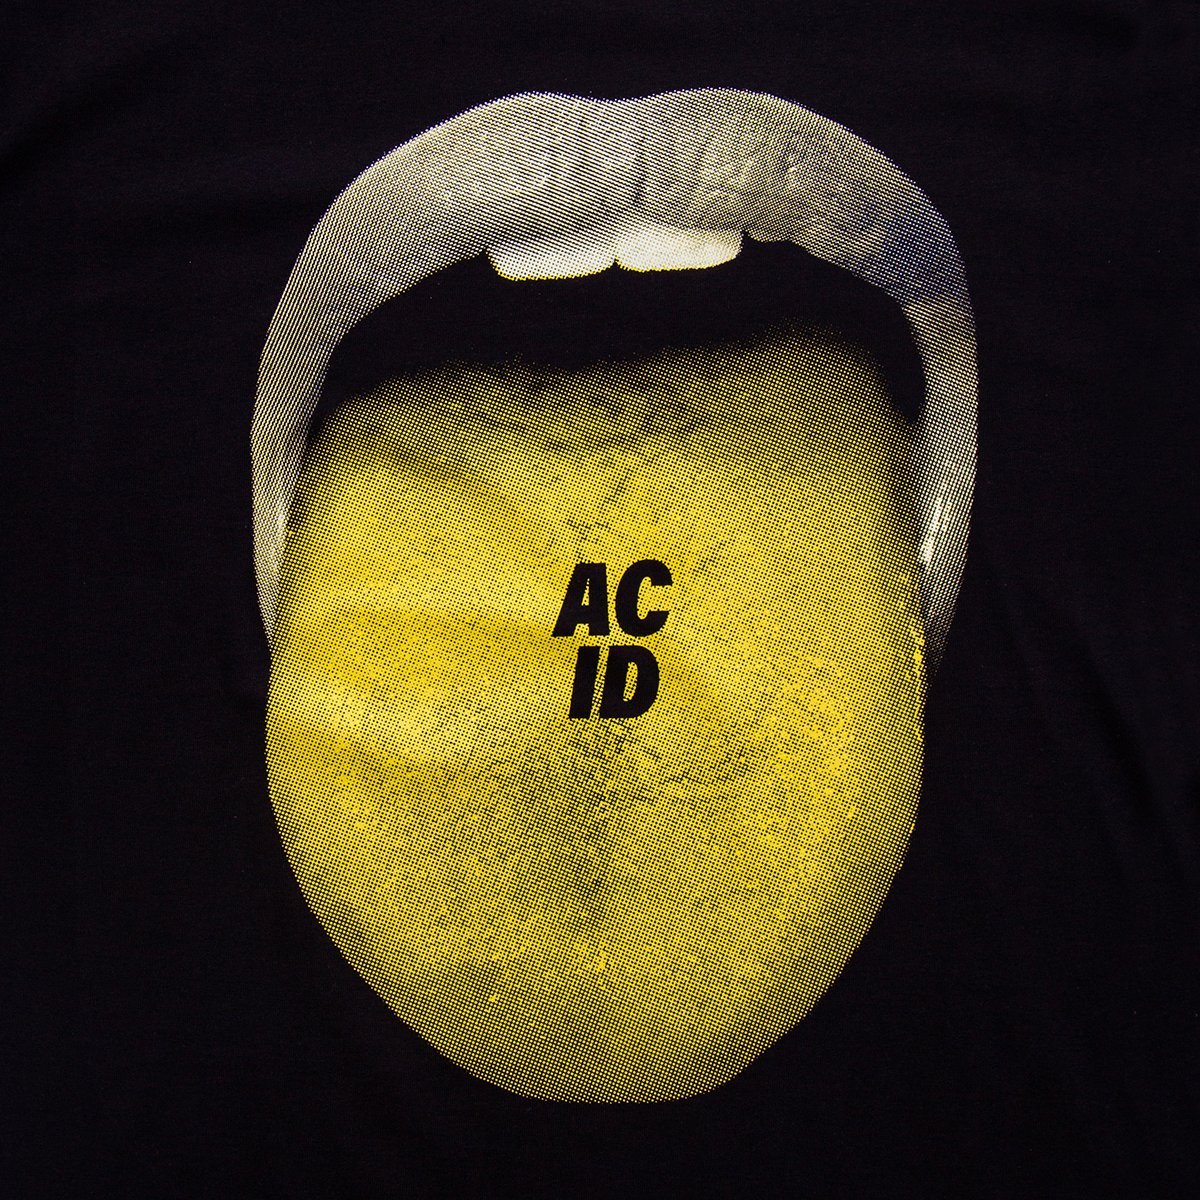 Acid Drop  - Oversized Tshirt - Black